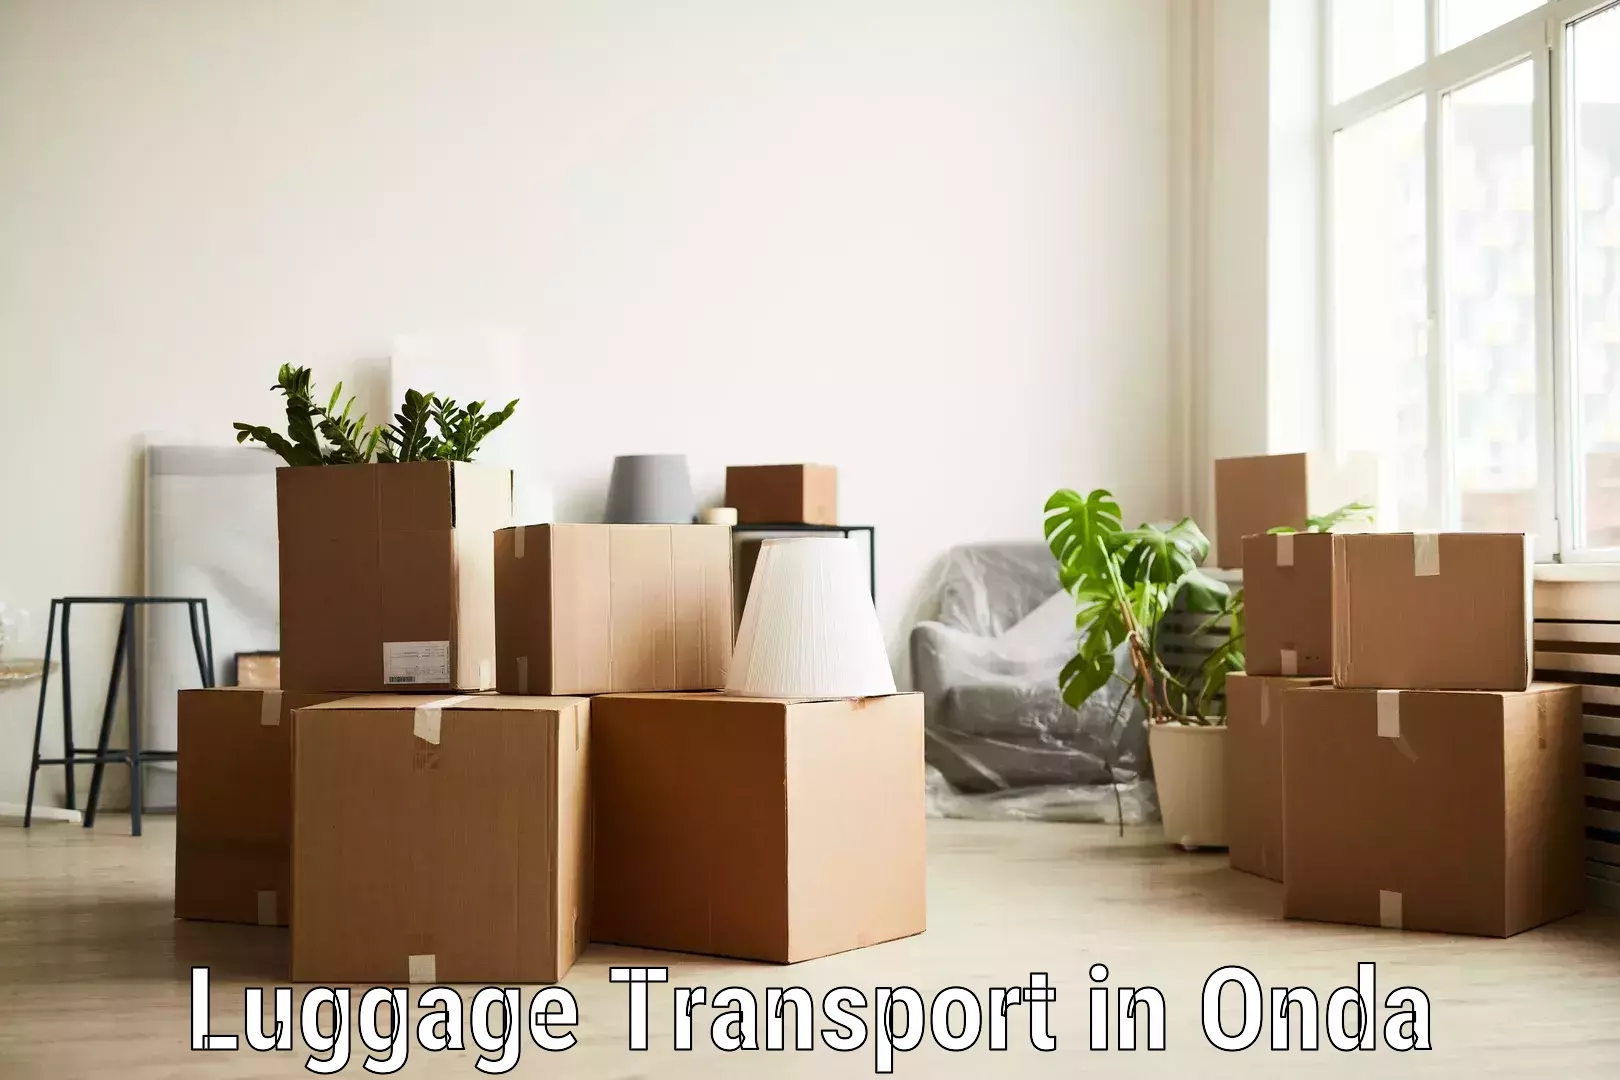 Express baggage shipping in Onda